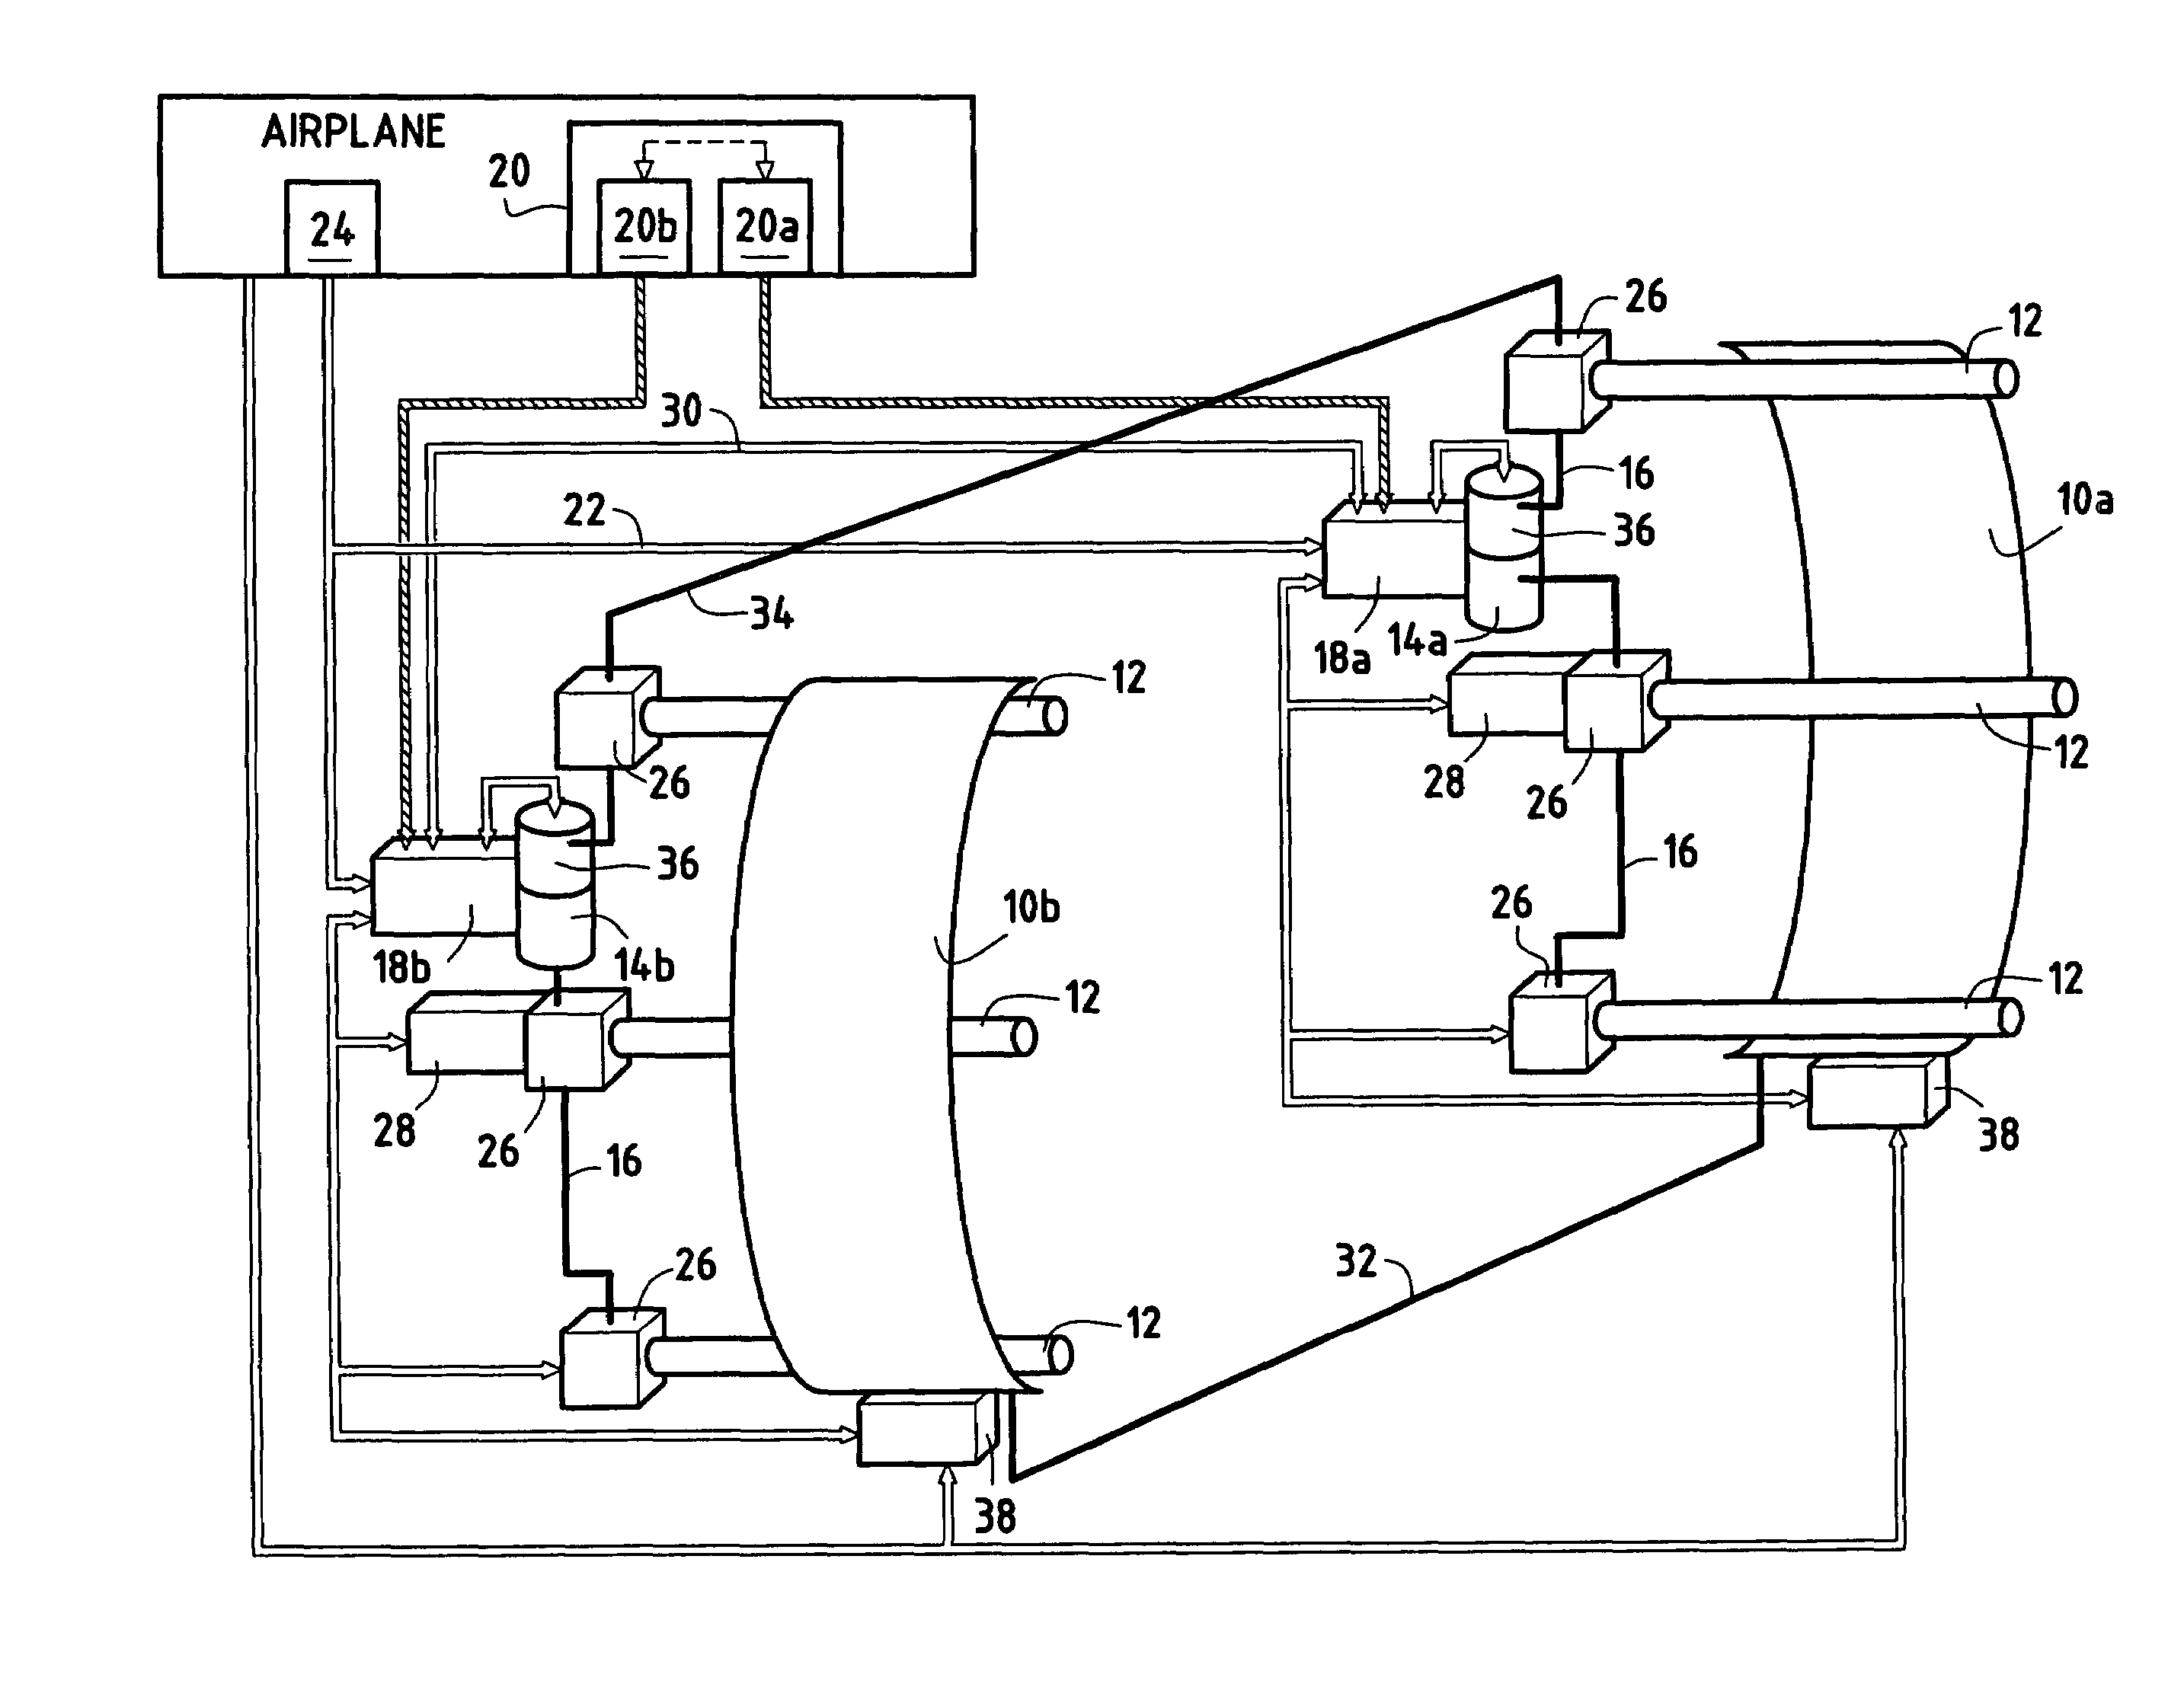 Turbojet electromechanical thrust reverser with servo-controlled door displacement